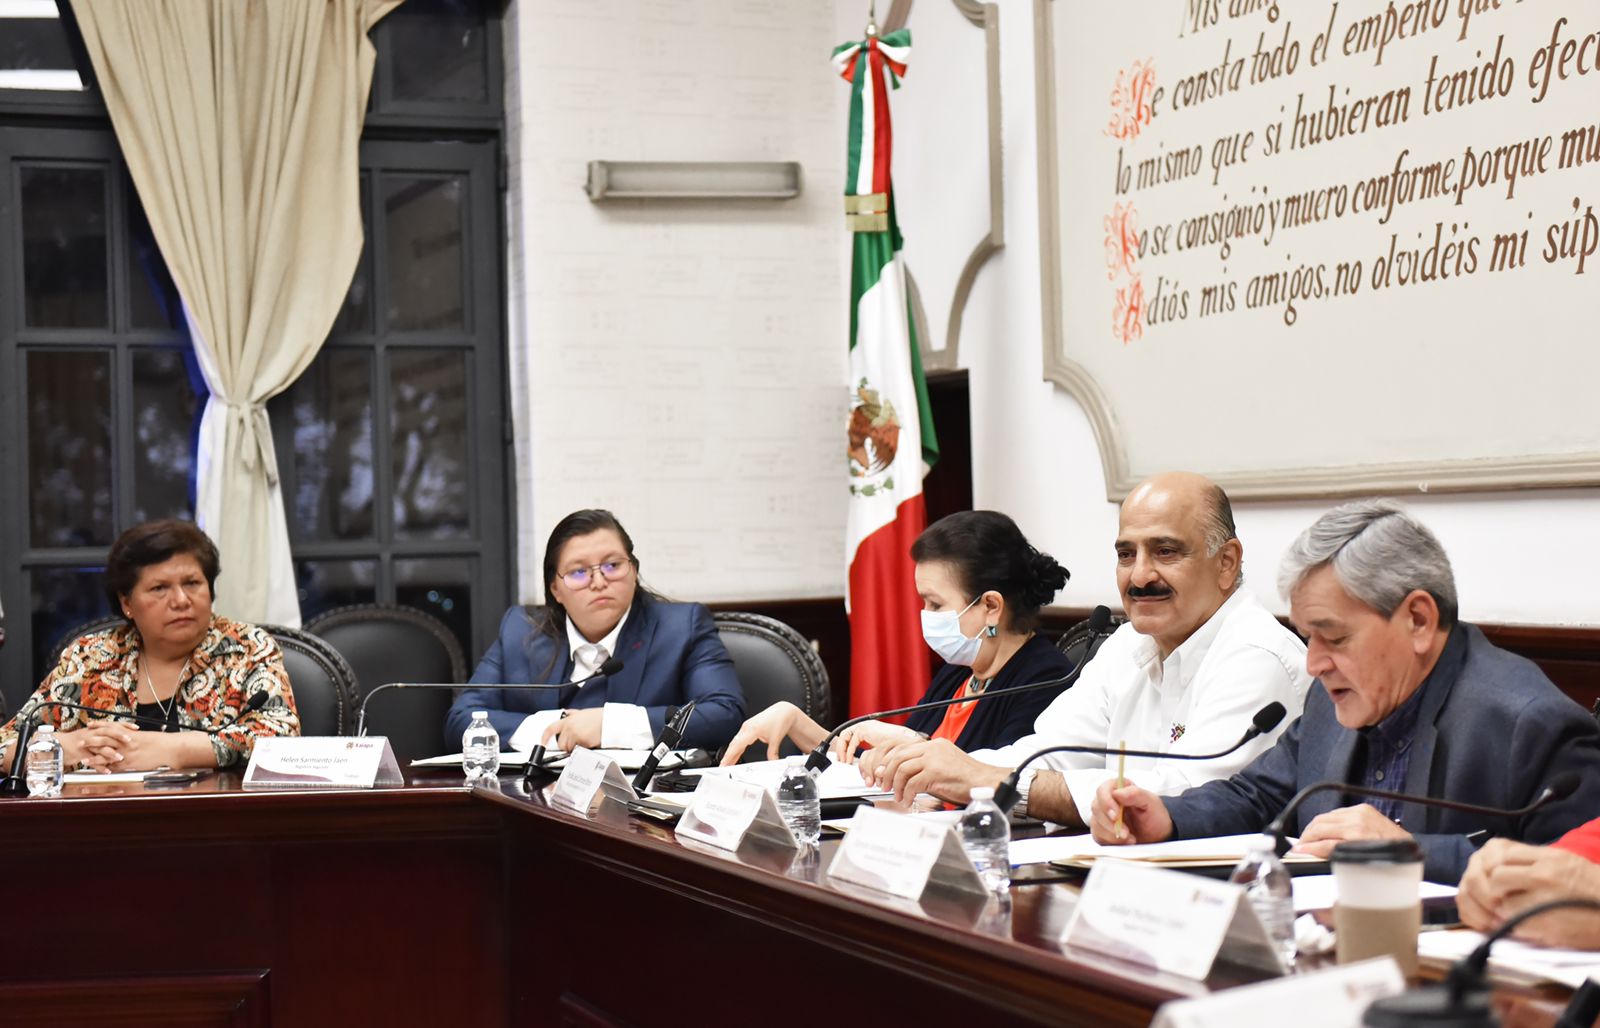 Aprueba Consejo de Desarrollo Municipal de Xalapa informes de obra pública